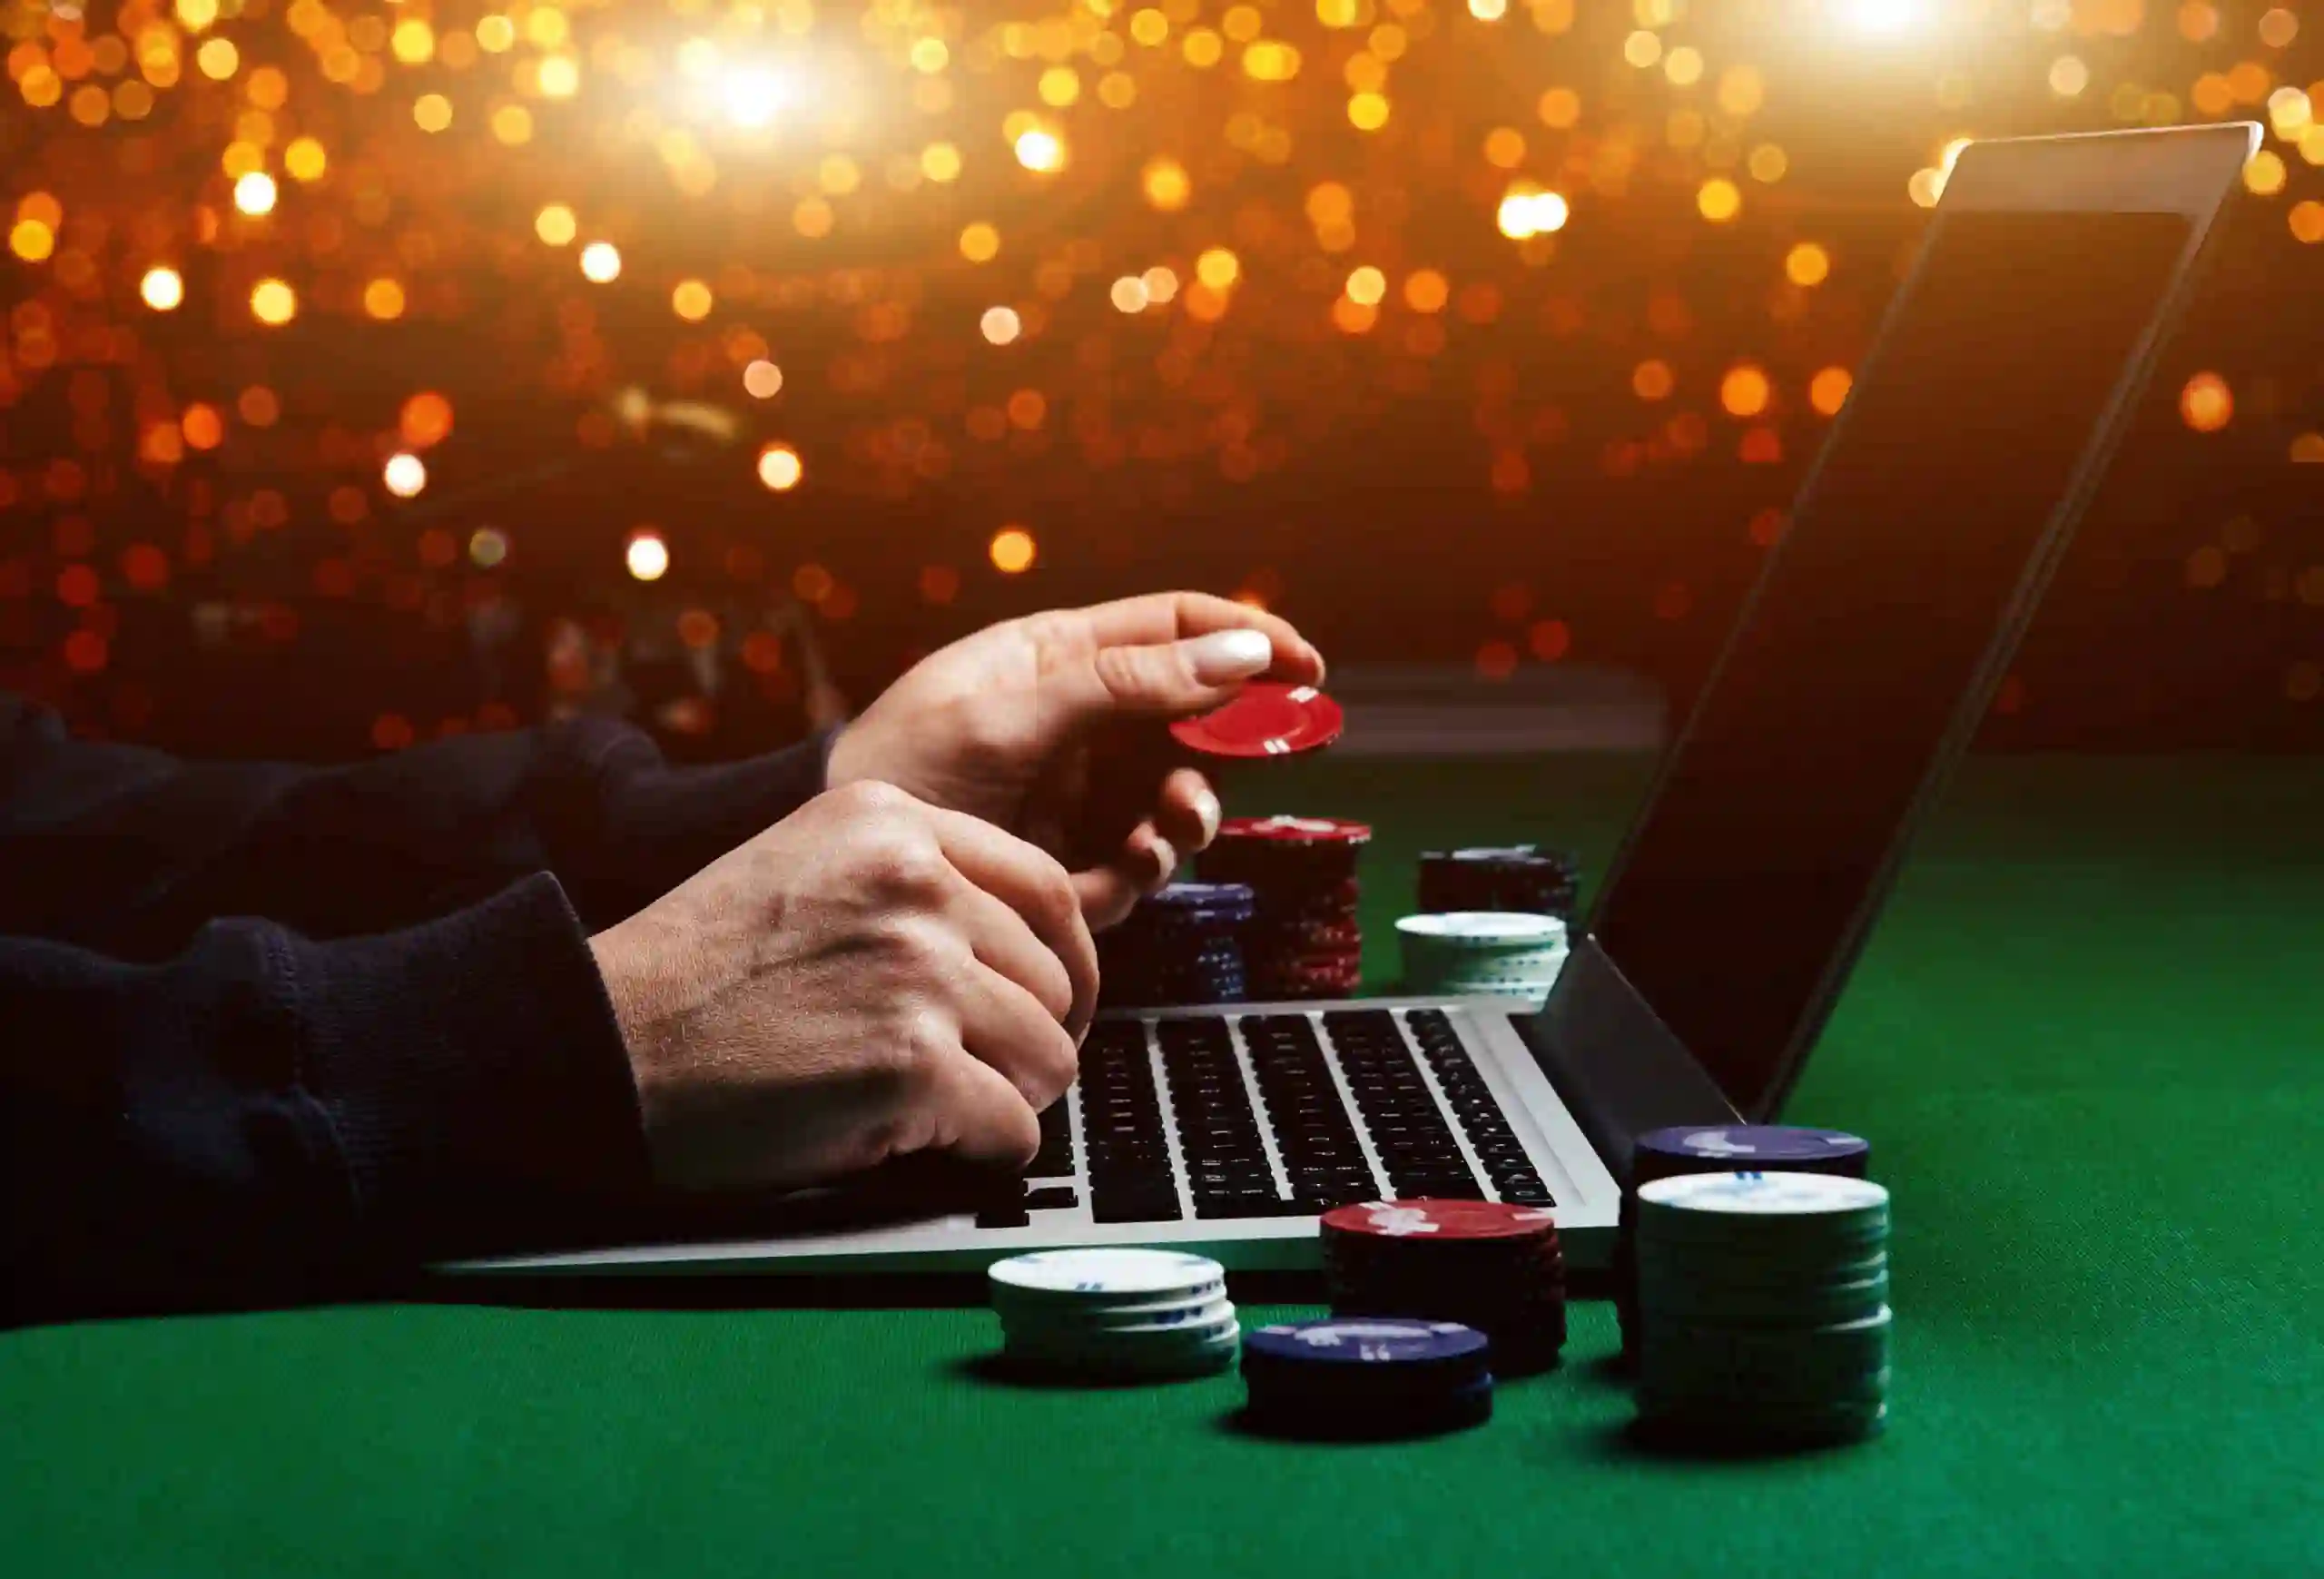 Free Online Gambling - Where to Start?